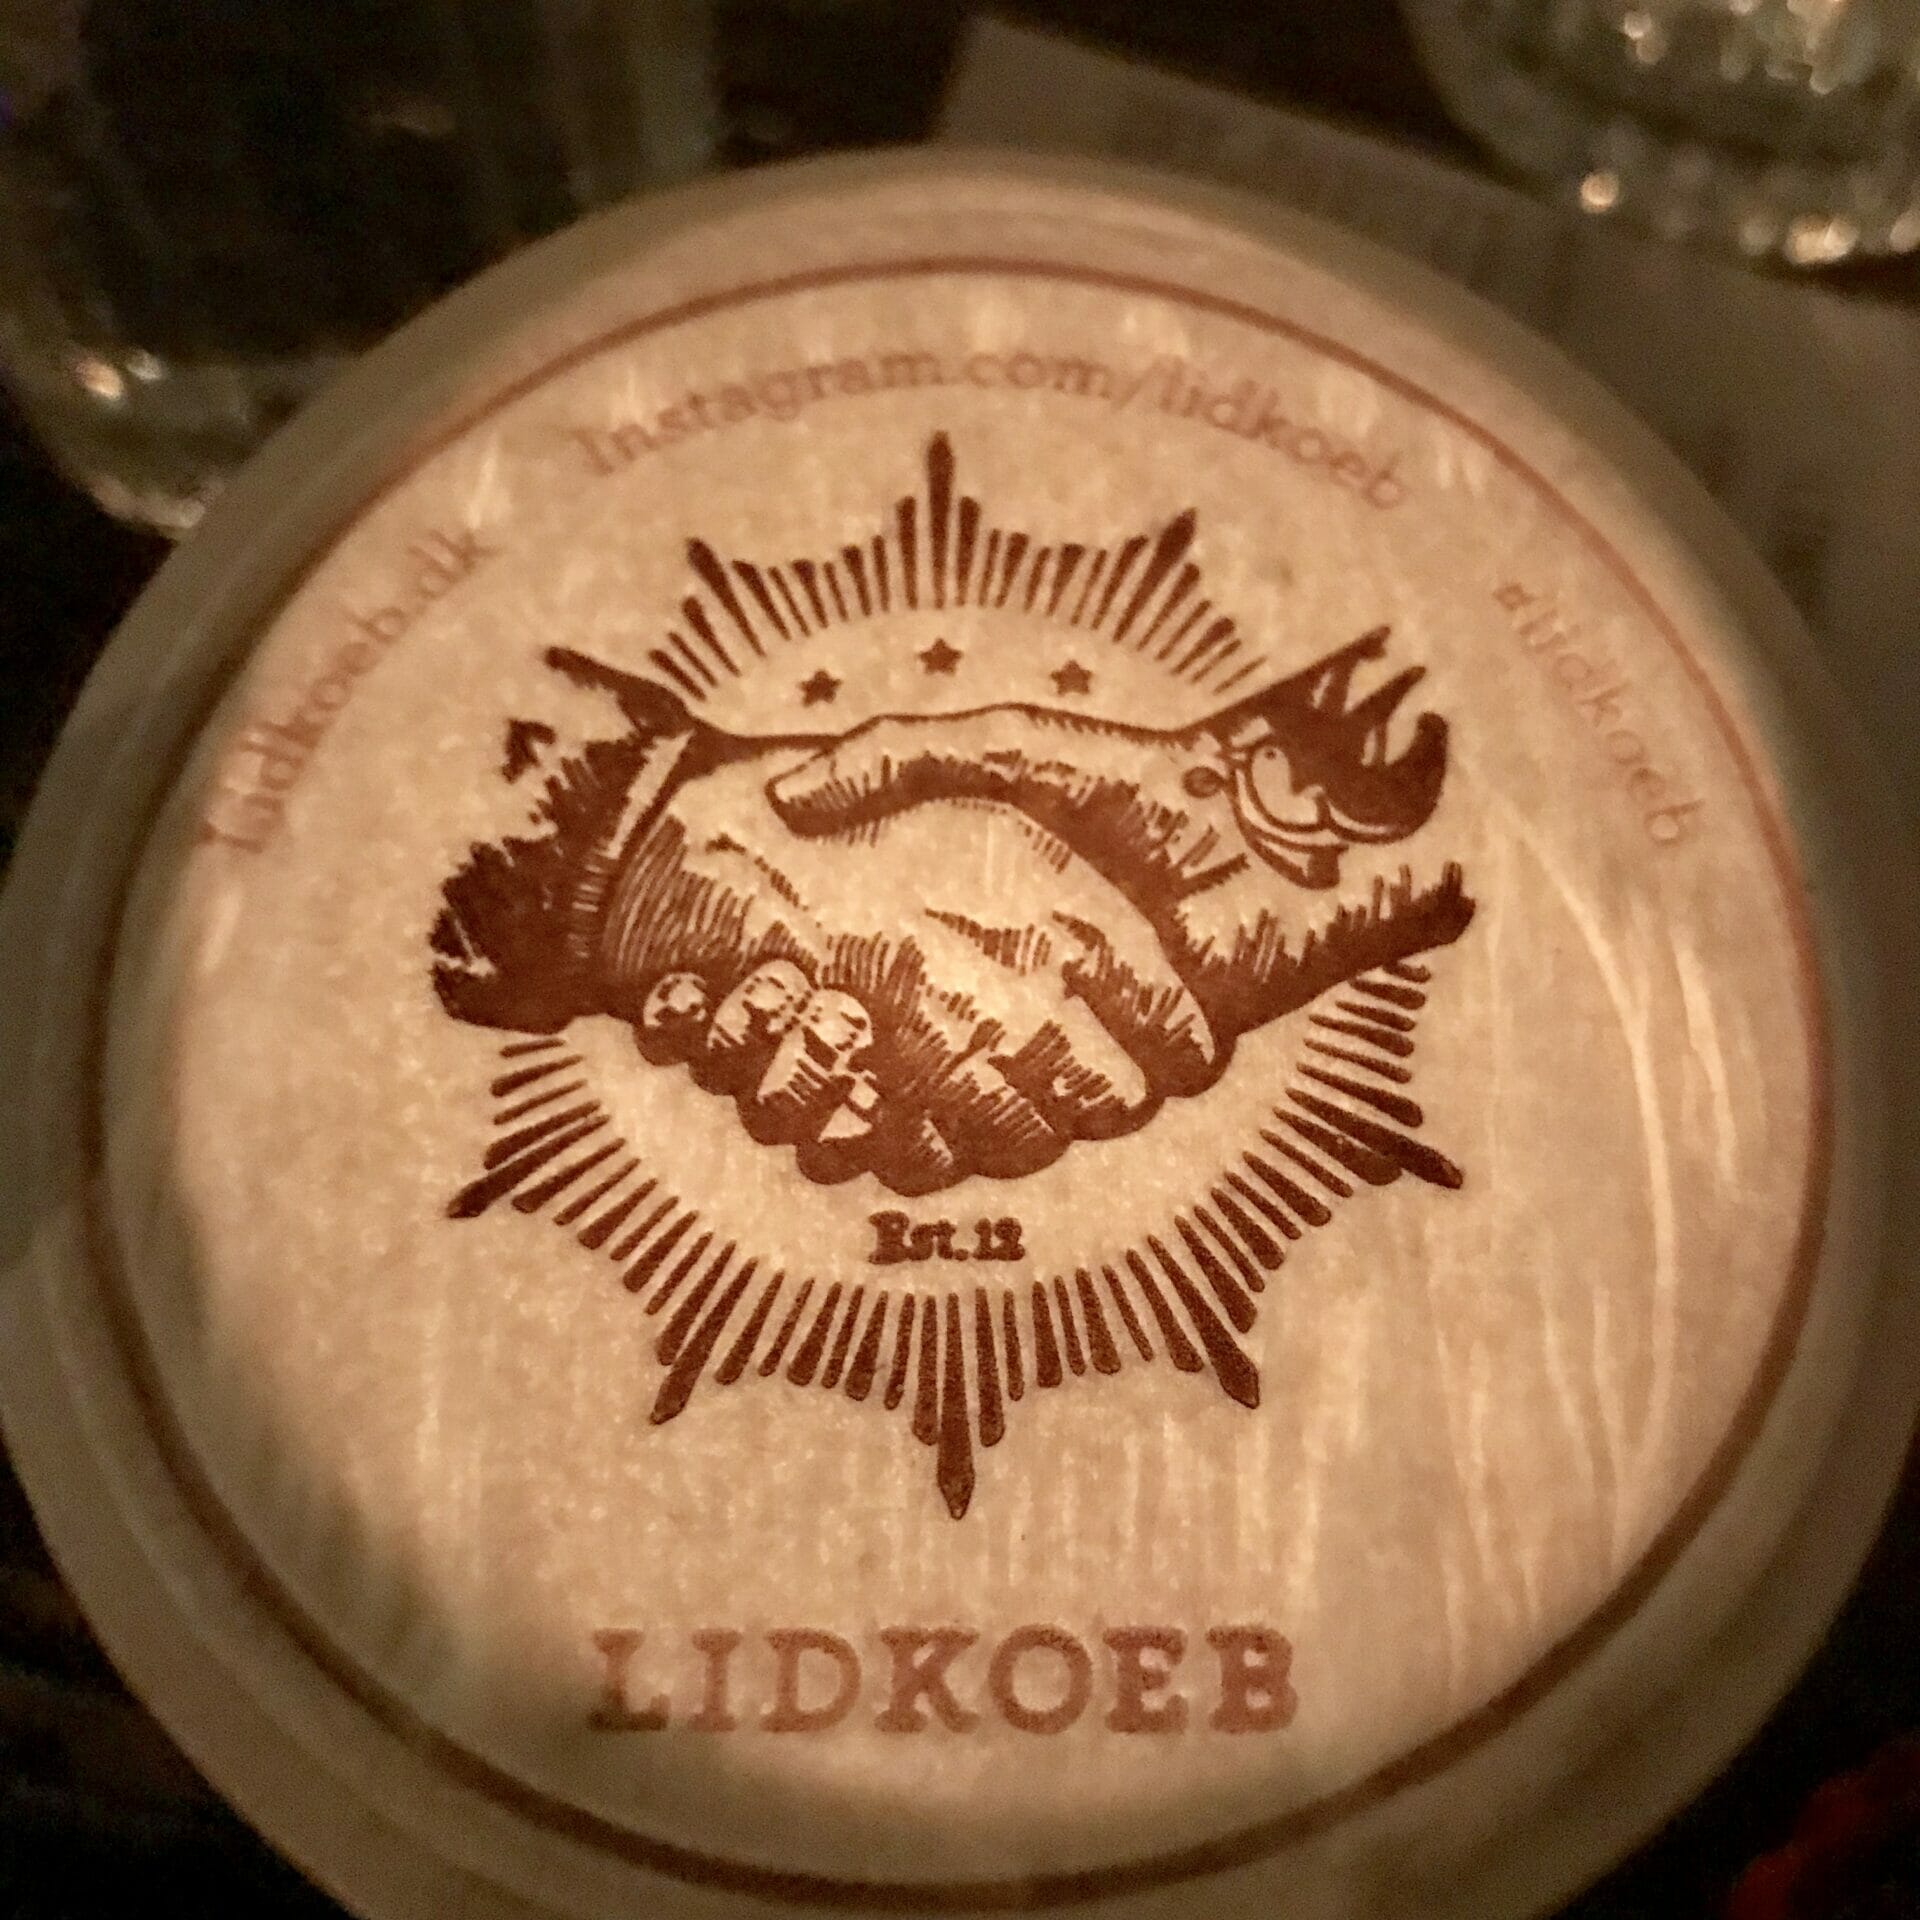 Lidkoeb logo lit up